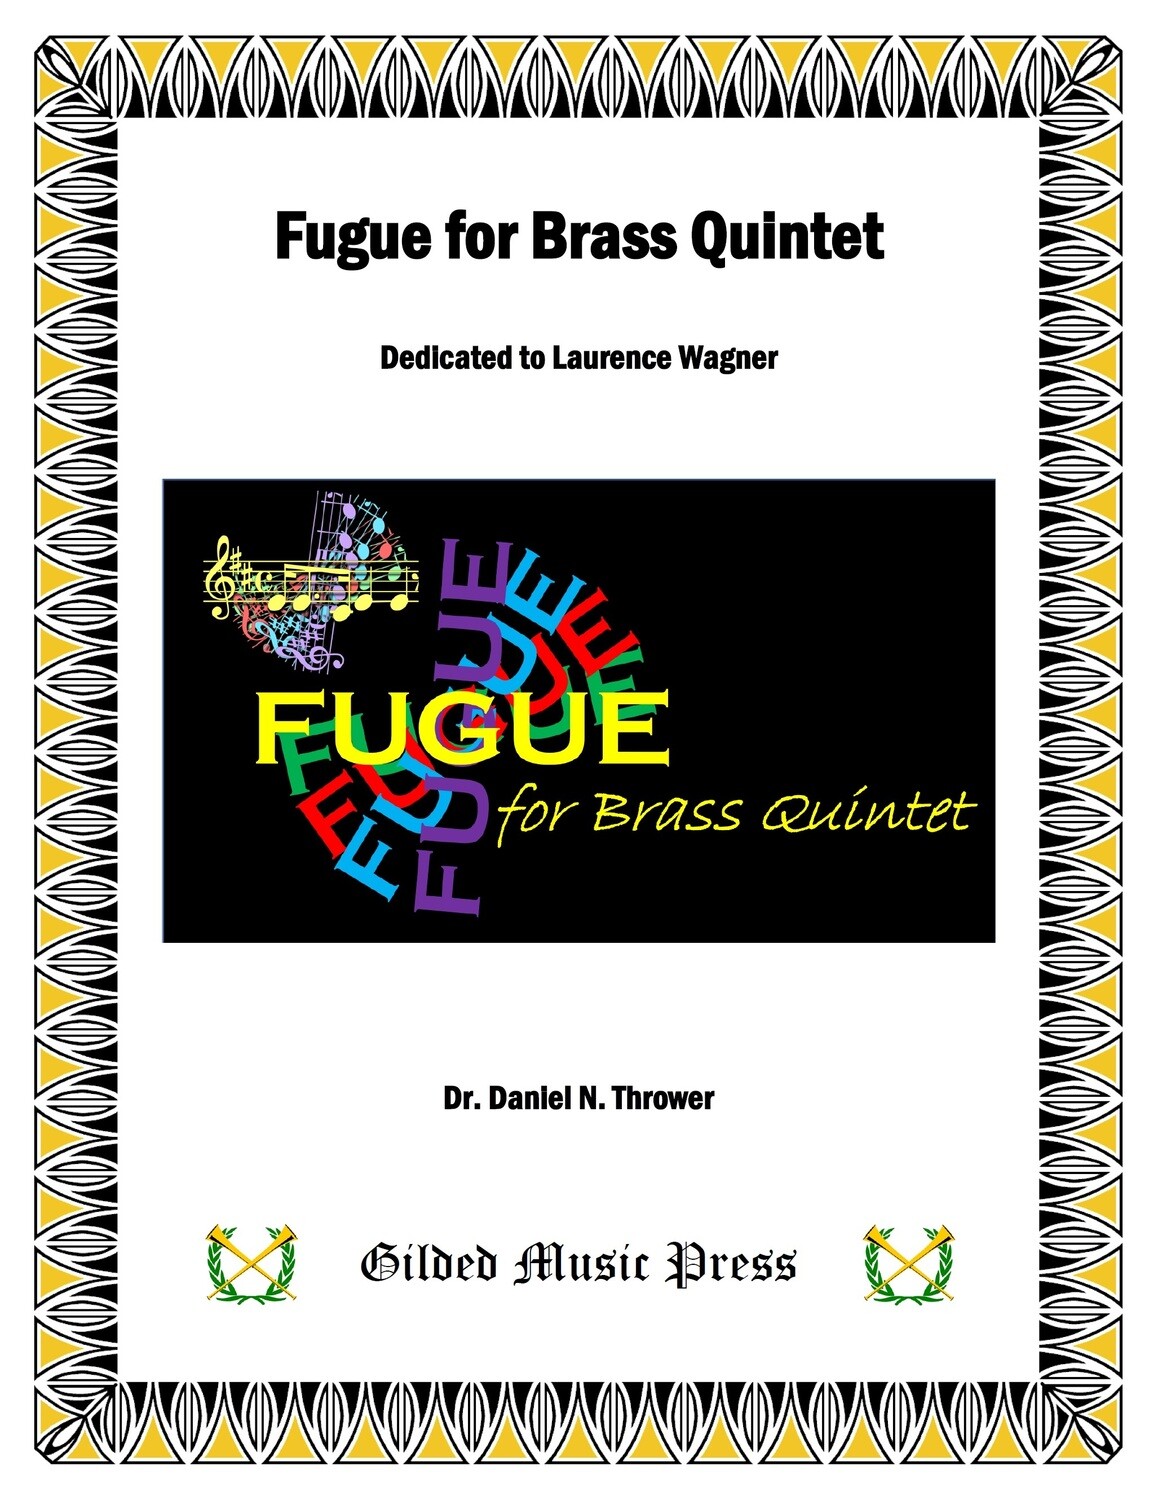 GMP 3036: Fugue for Brass Quintet, Dr. Daniel Thrower